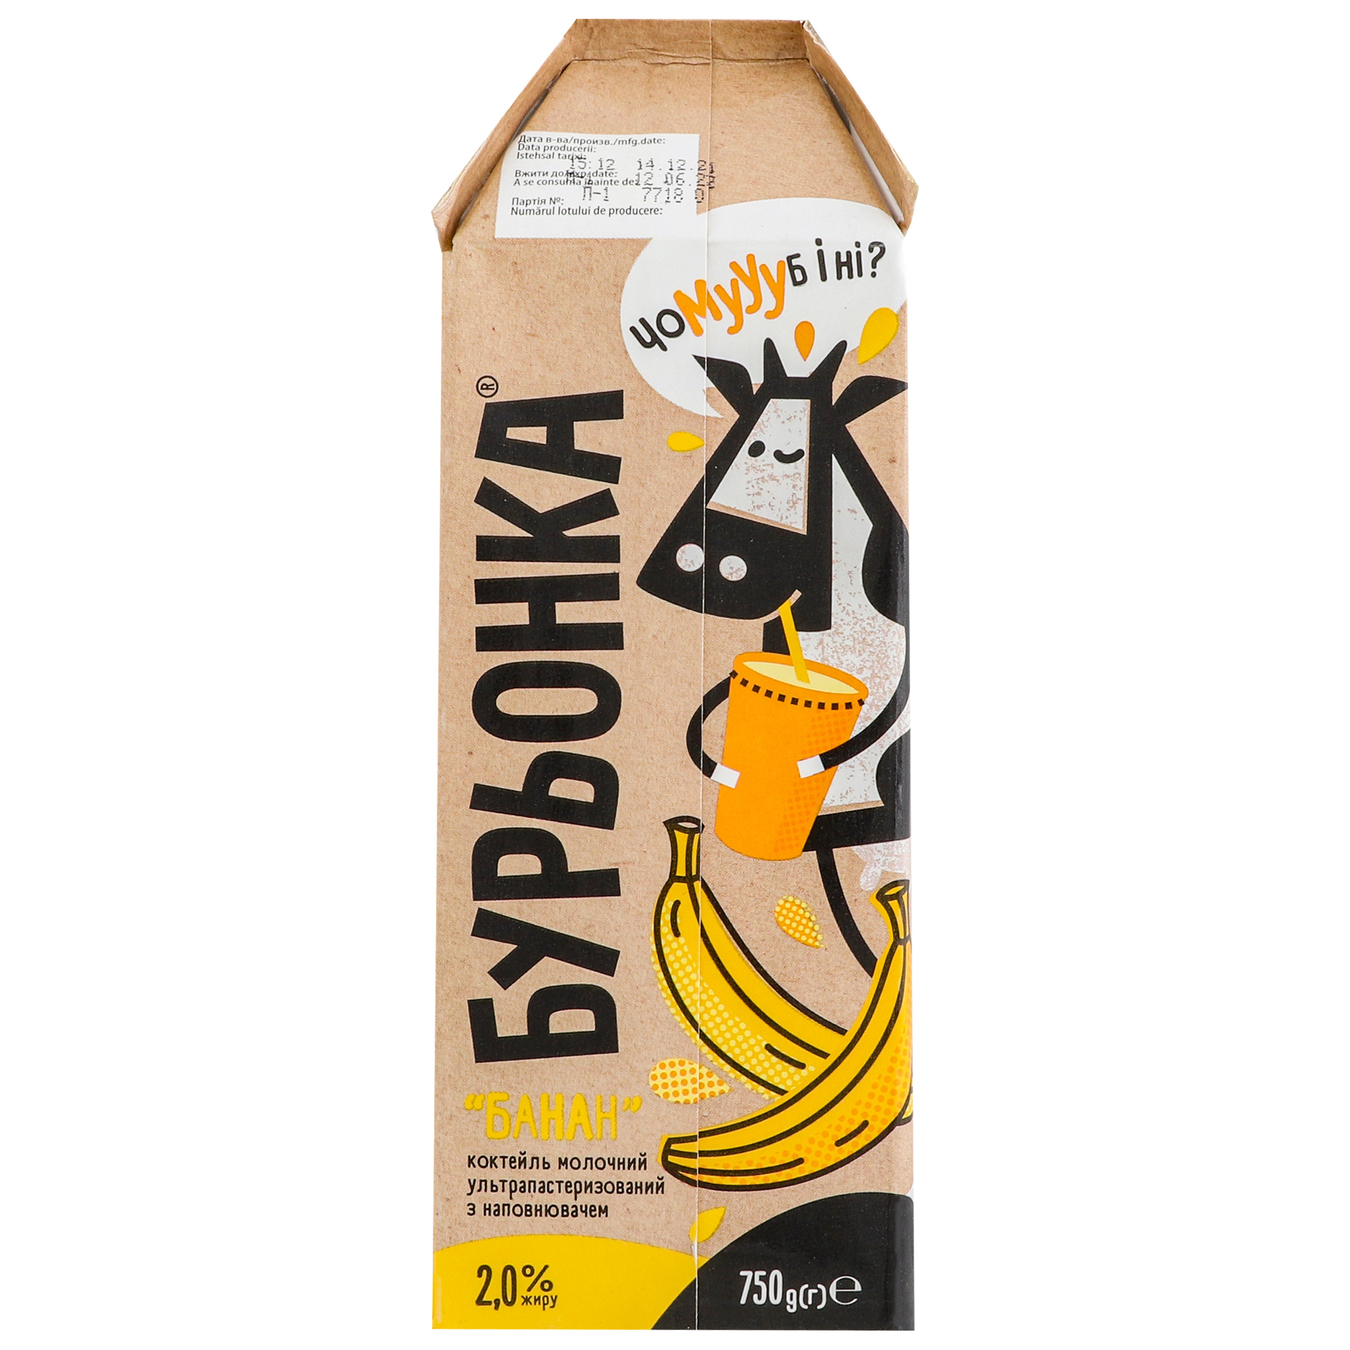 Buryonka Banana Ultra-pasteurized milk cocktail 2% 750g 4